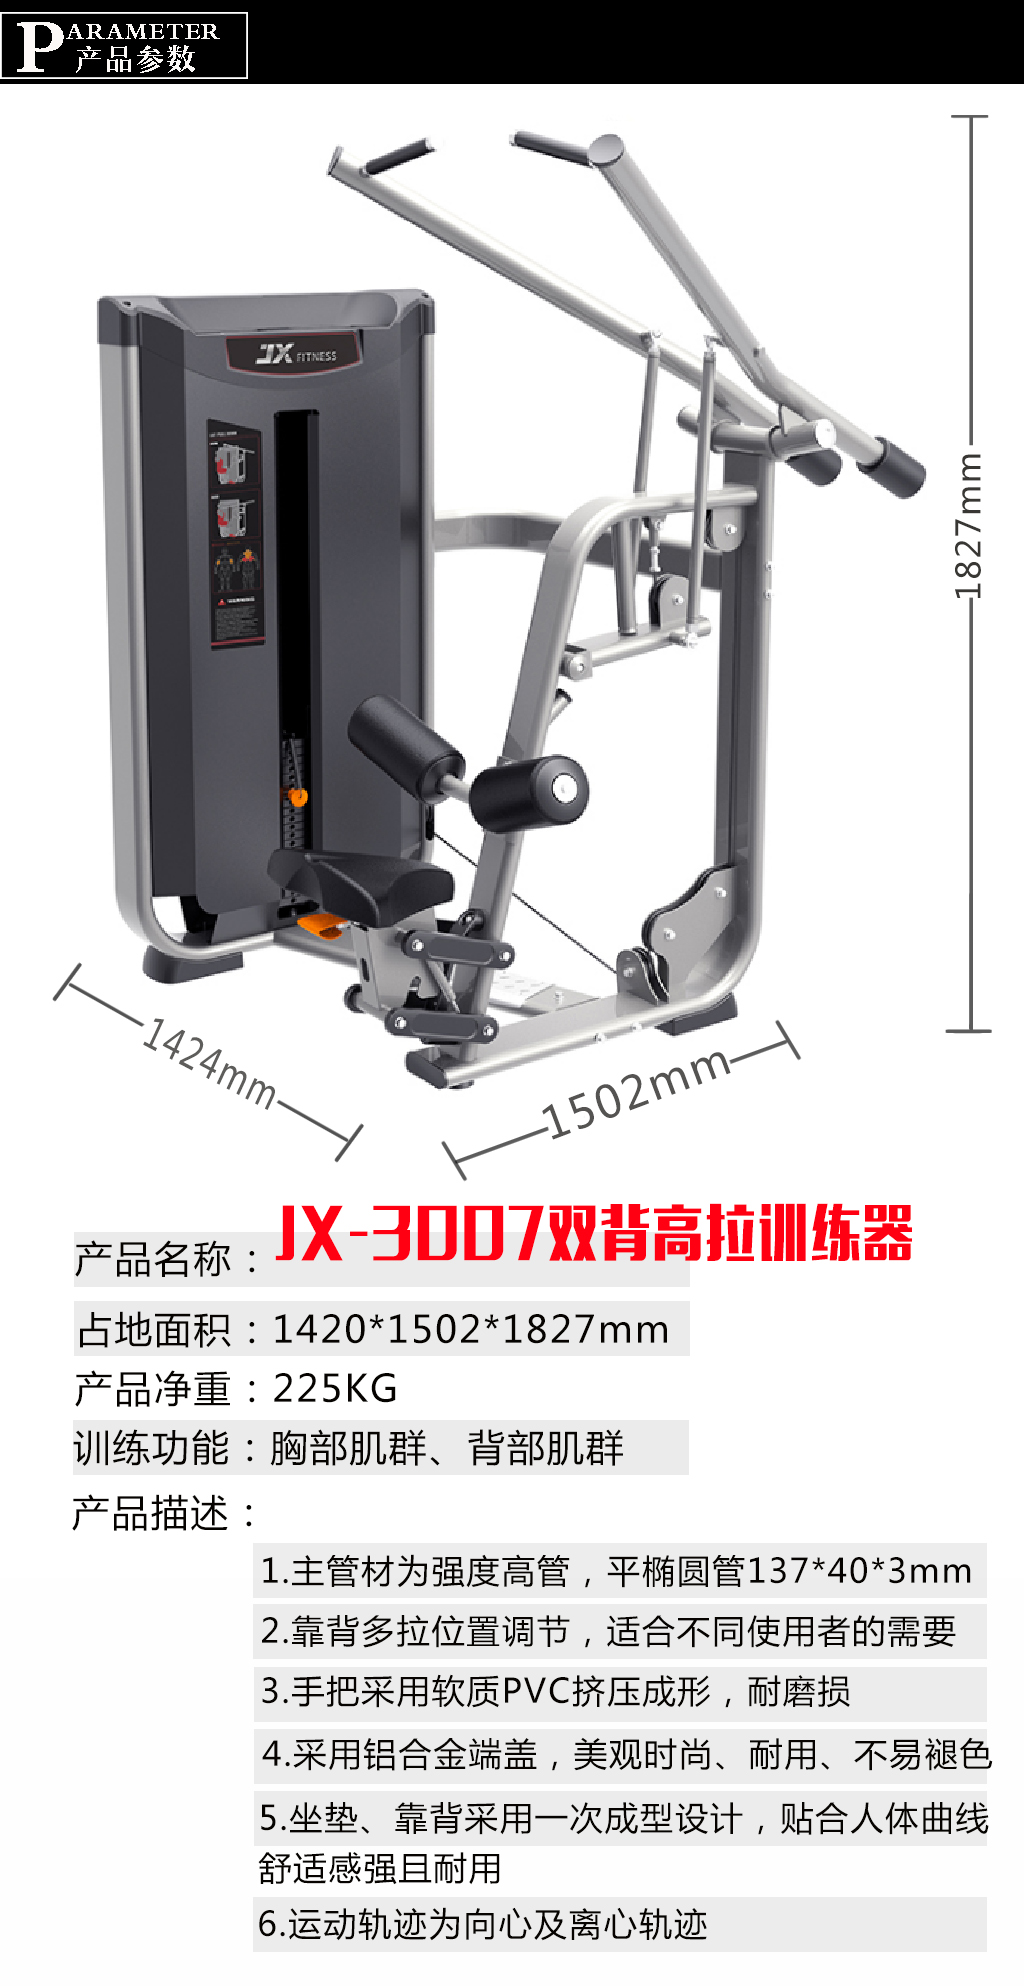 jx-3007双背高拉训练器